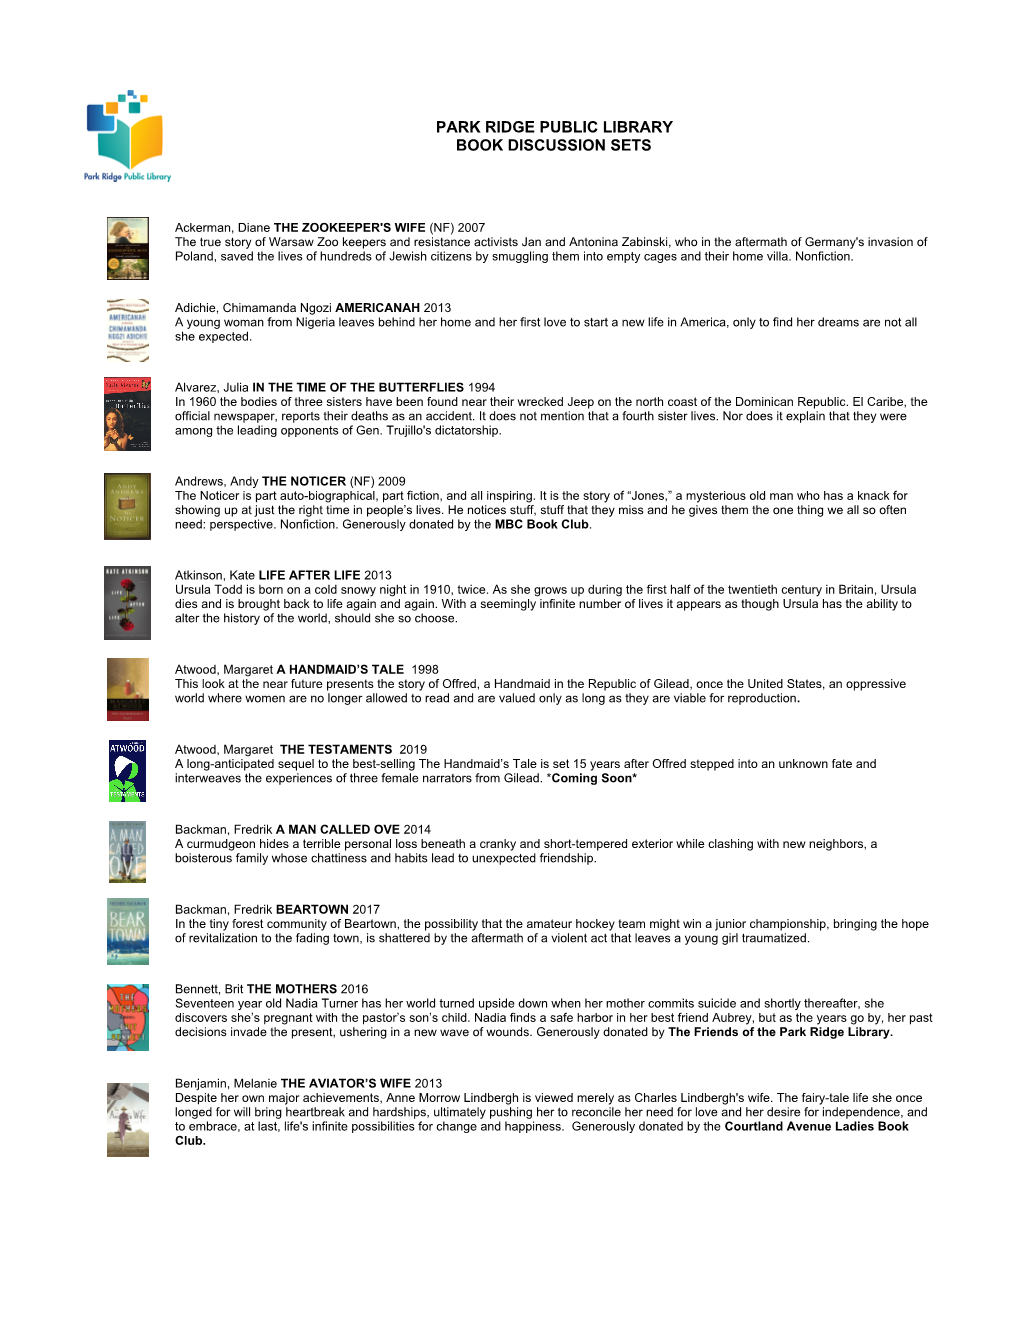 Book Discussion Set List